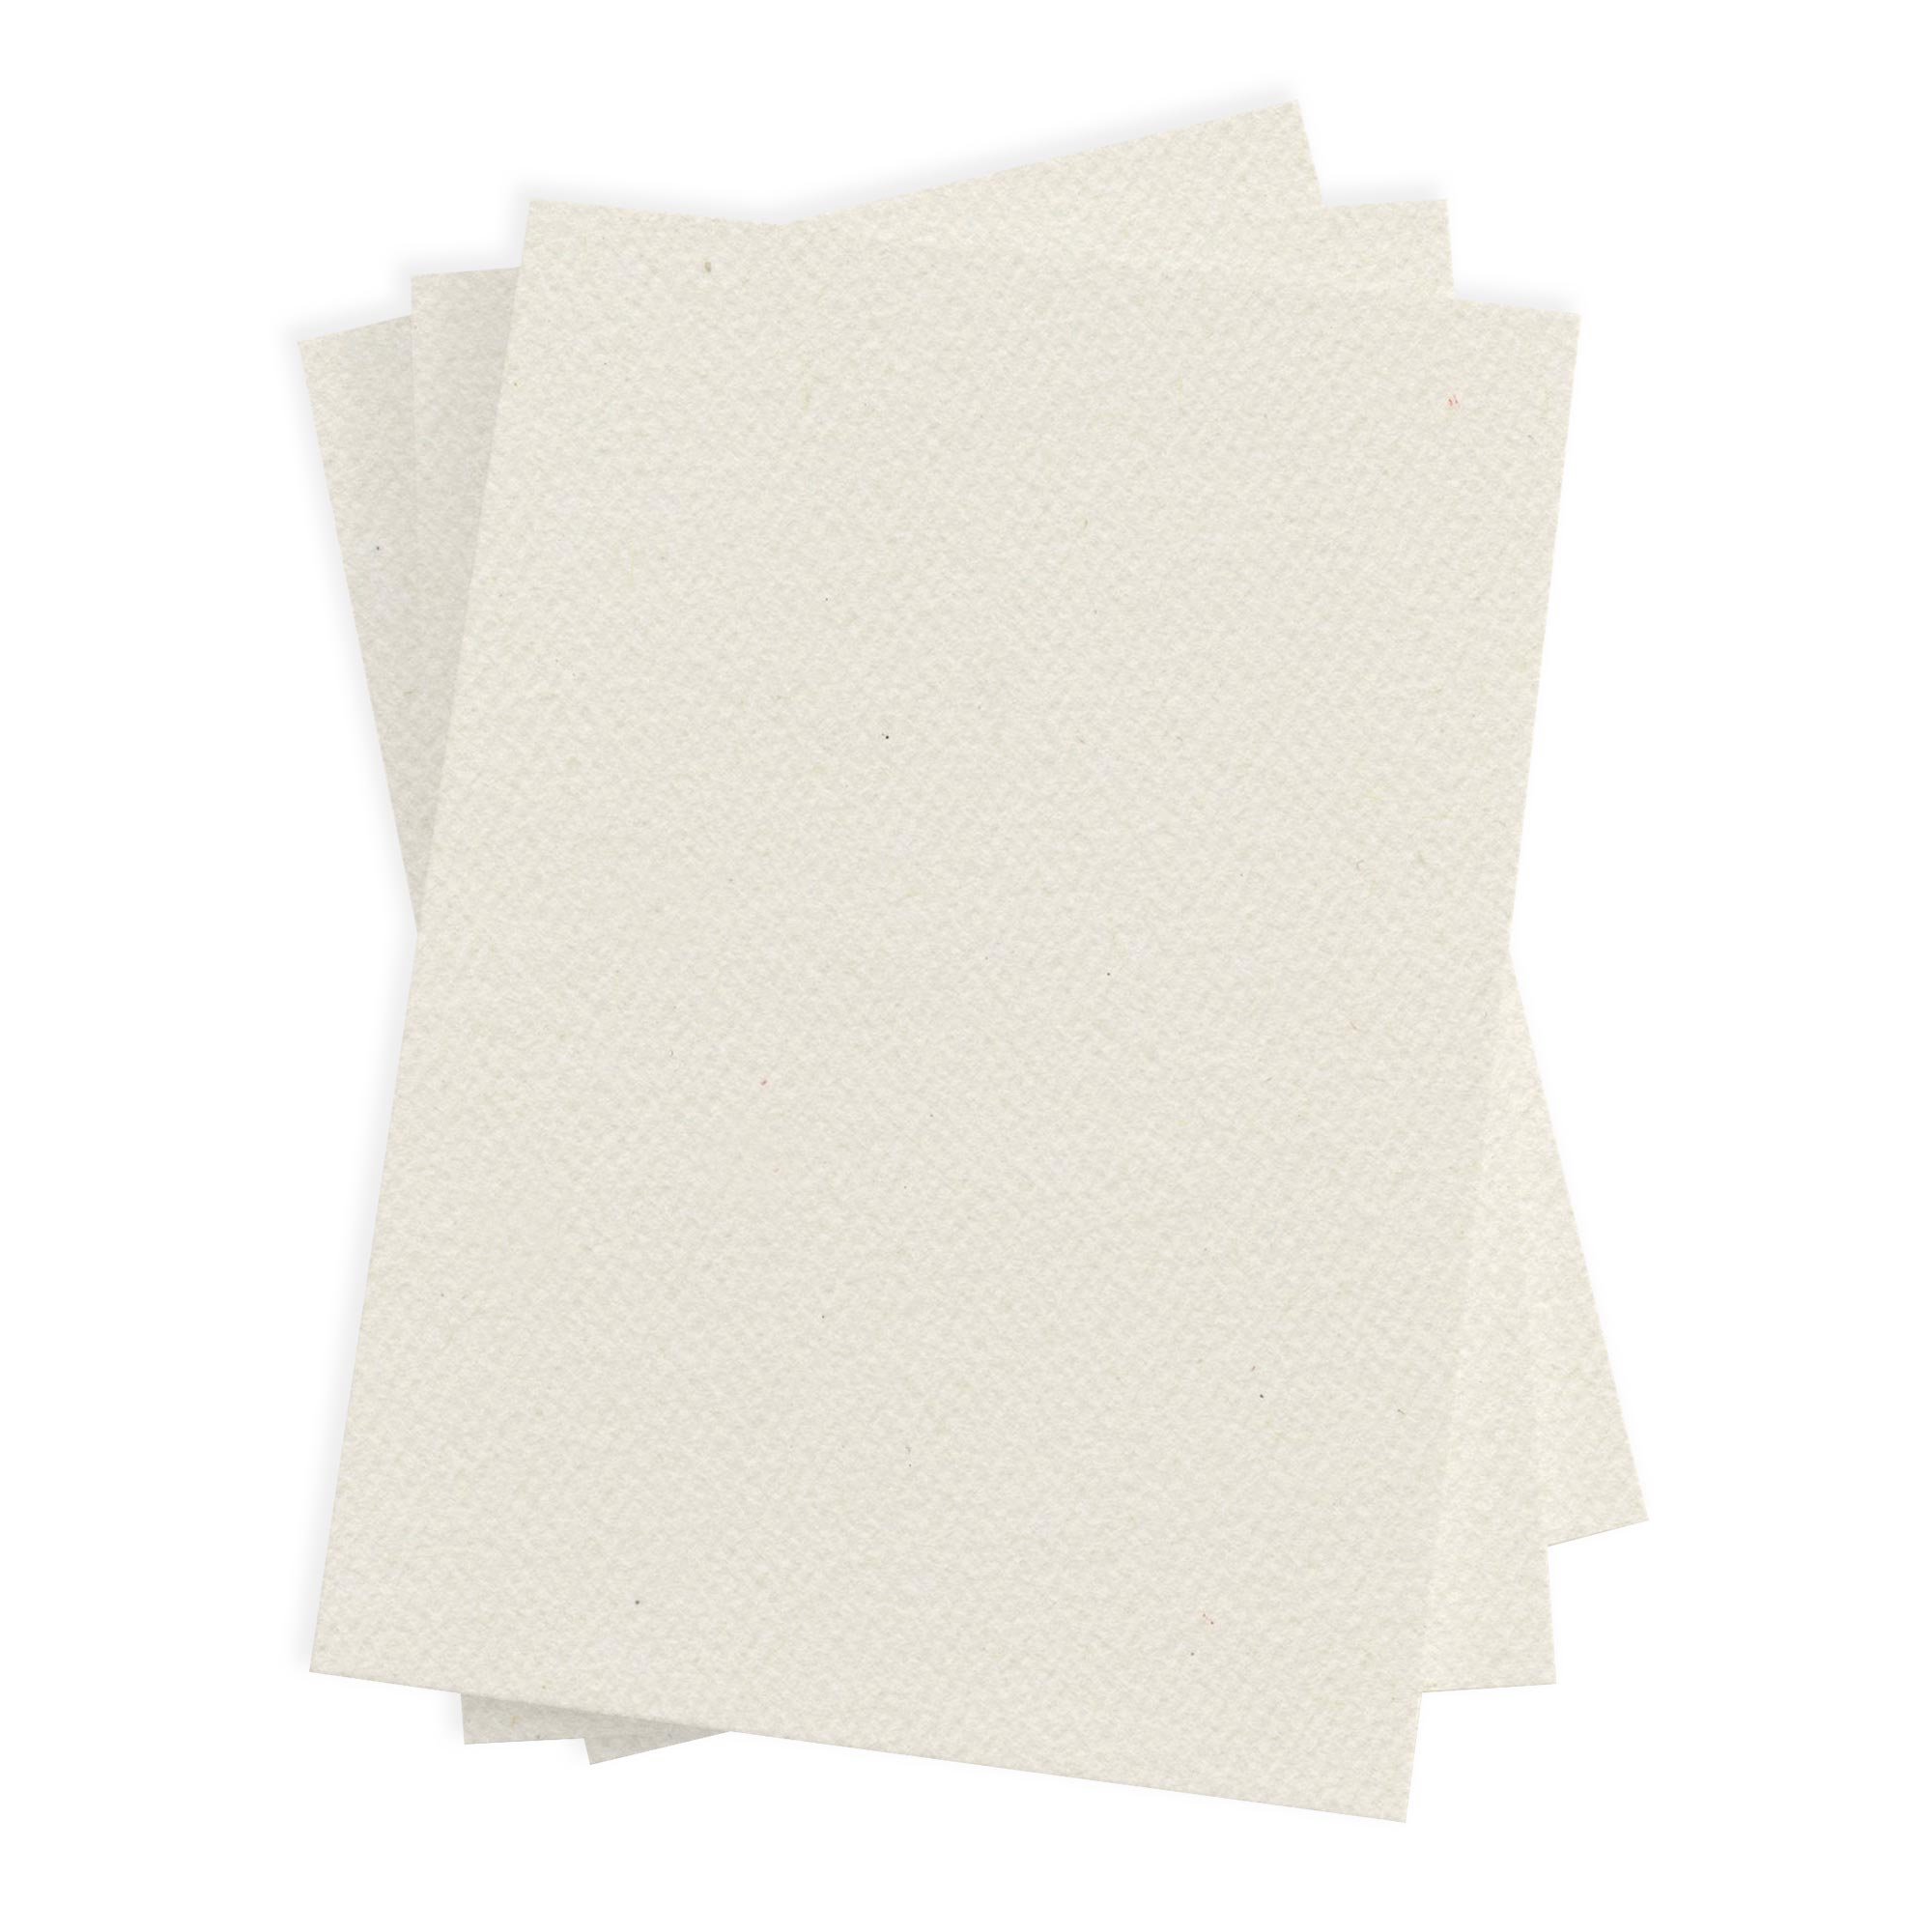 Ecru Card Stock - 8 1/2 x 11 LCI Smooth 80lb Cover - LCI Paper